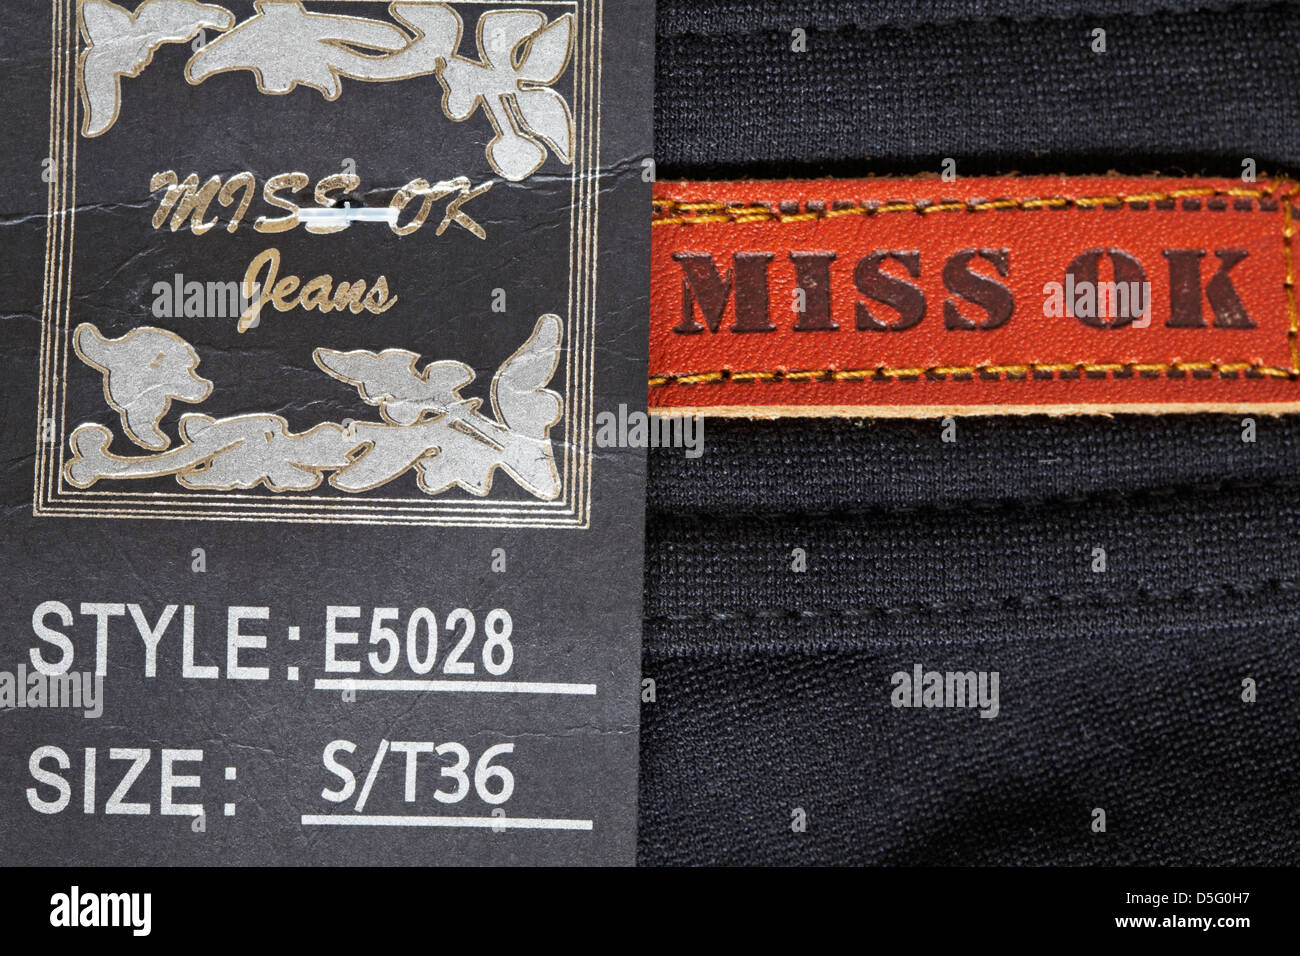 Miss OK jeans label Photo -